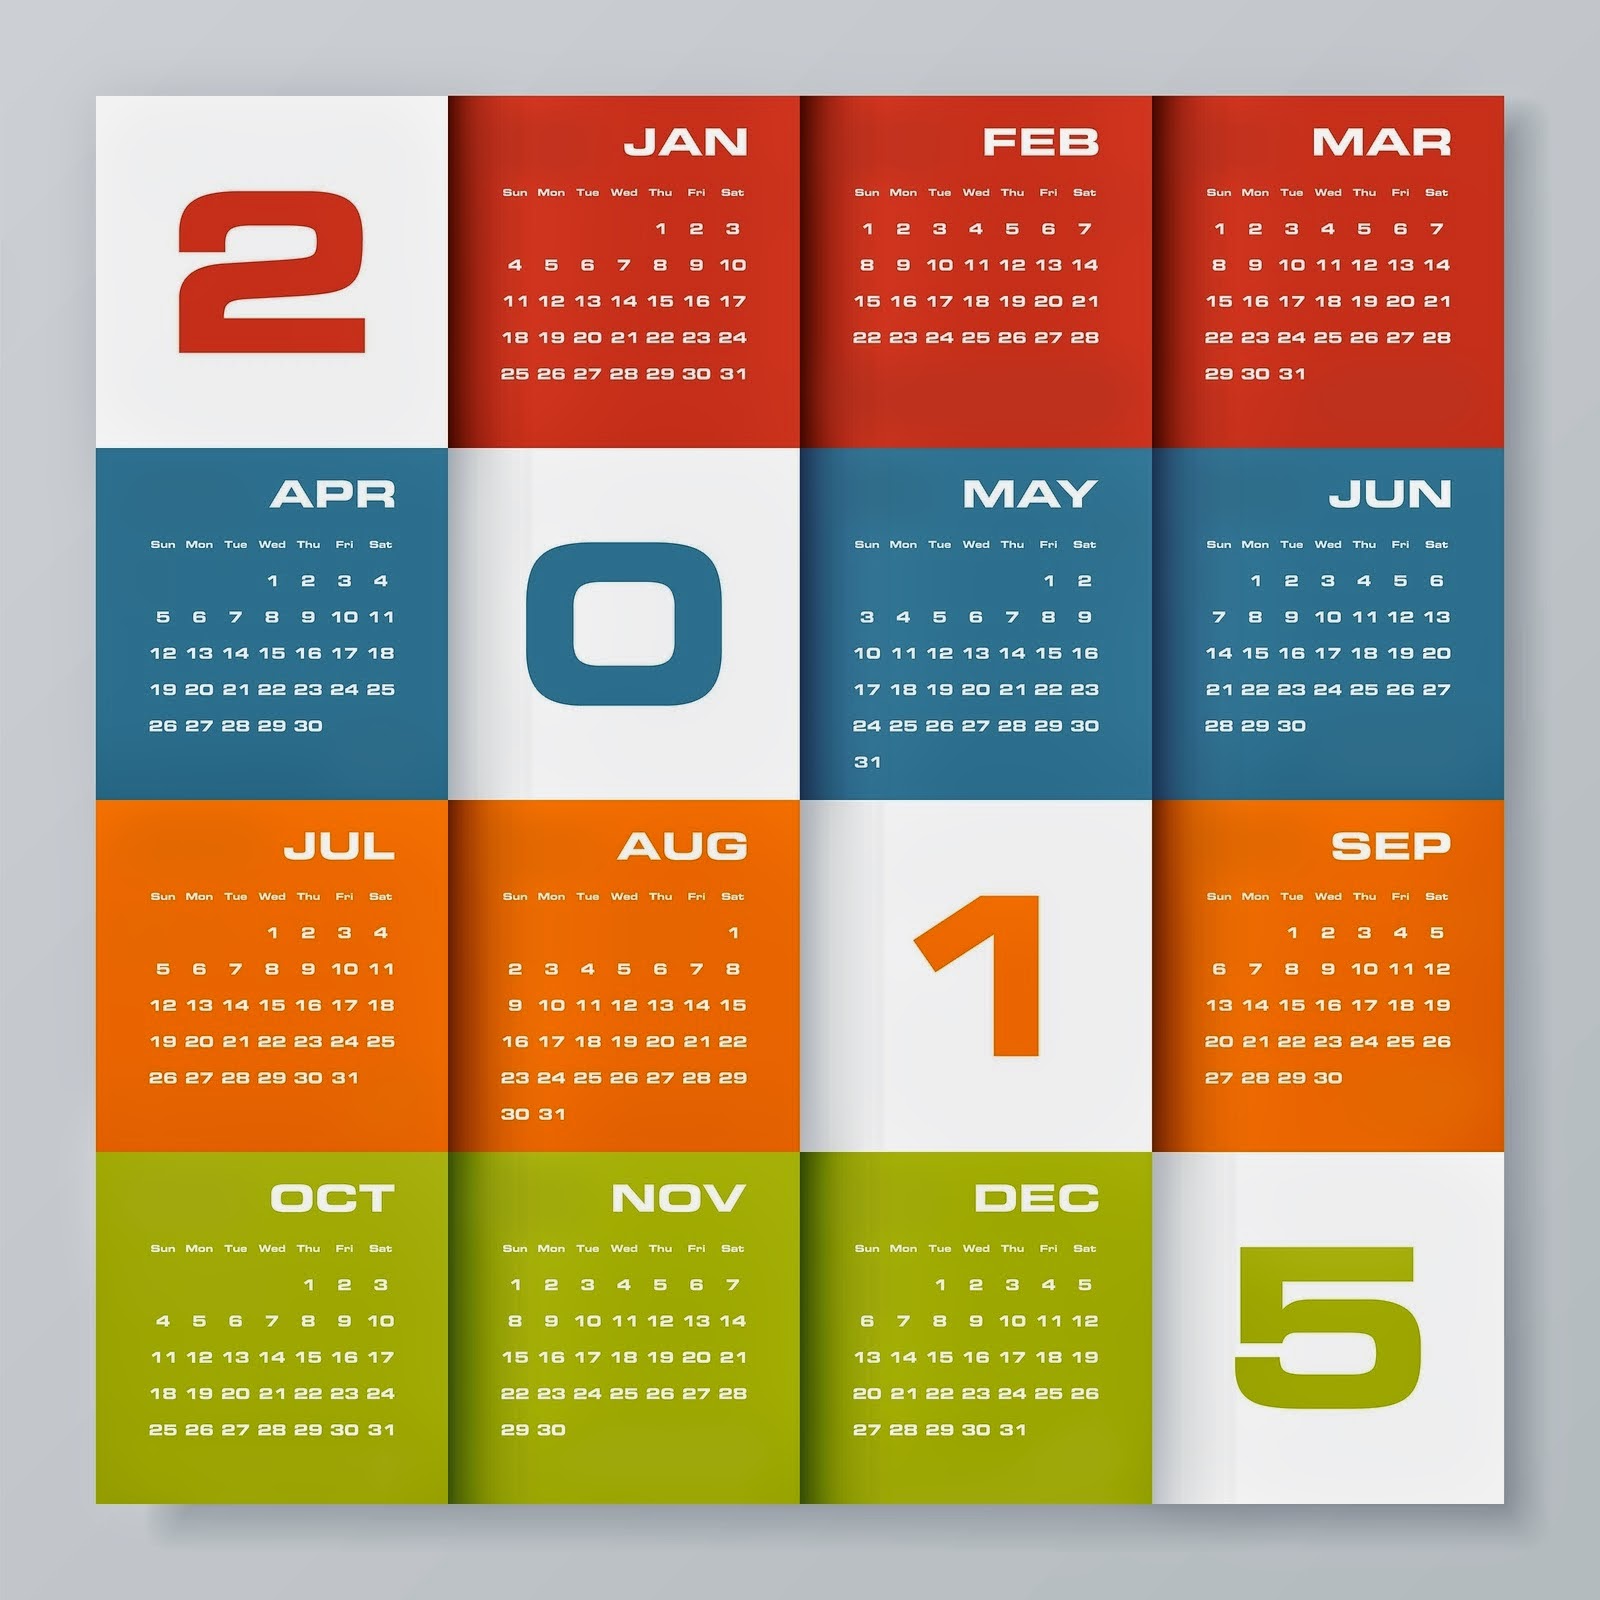 get-a-completely-designed-website-for-699-only-new-year-2015-calendar-for-desktop-laptop-pc